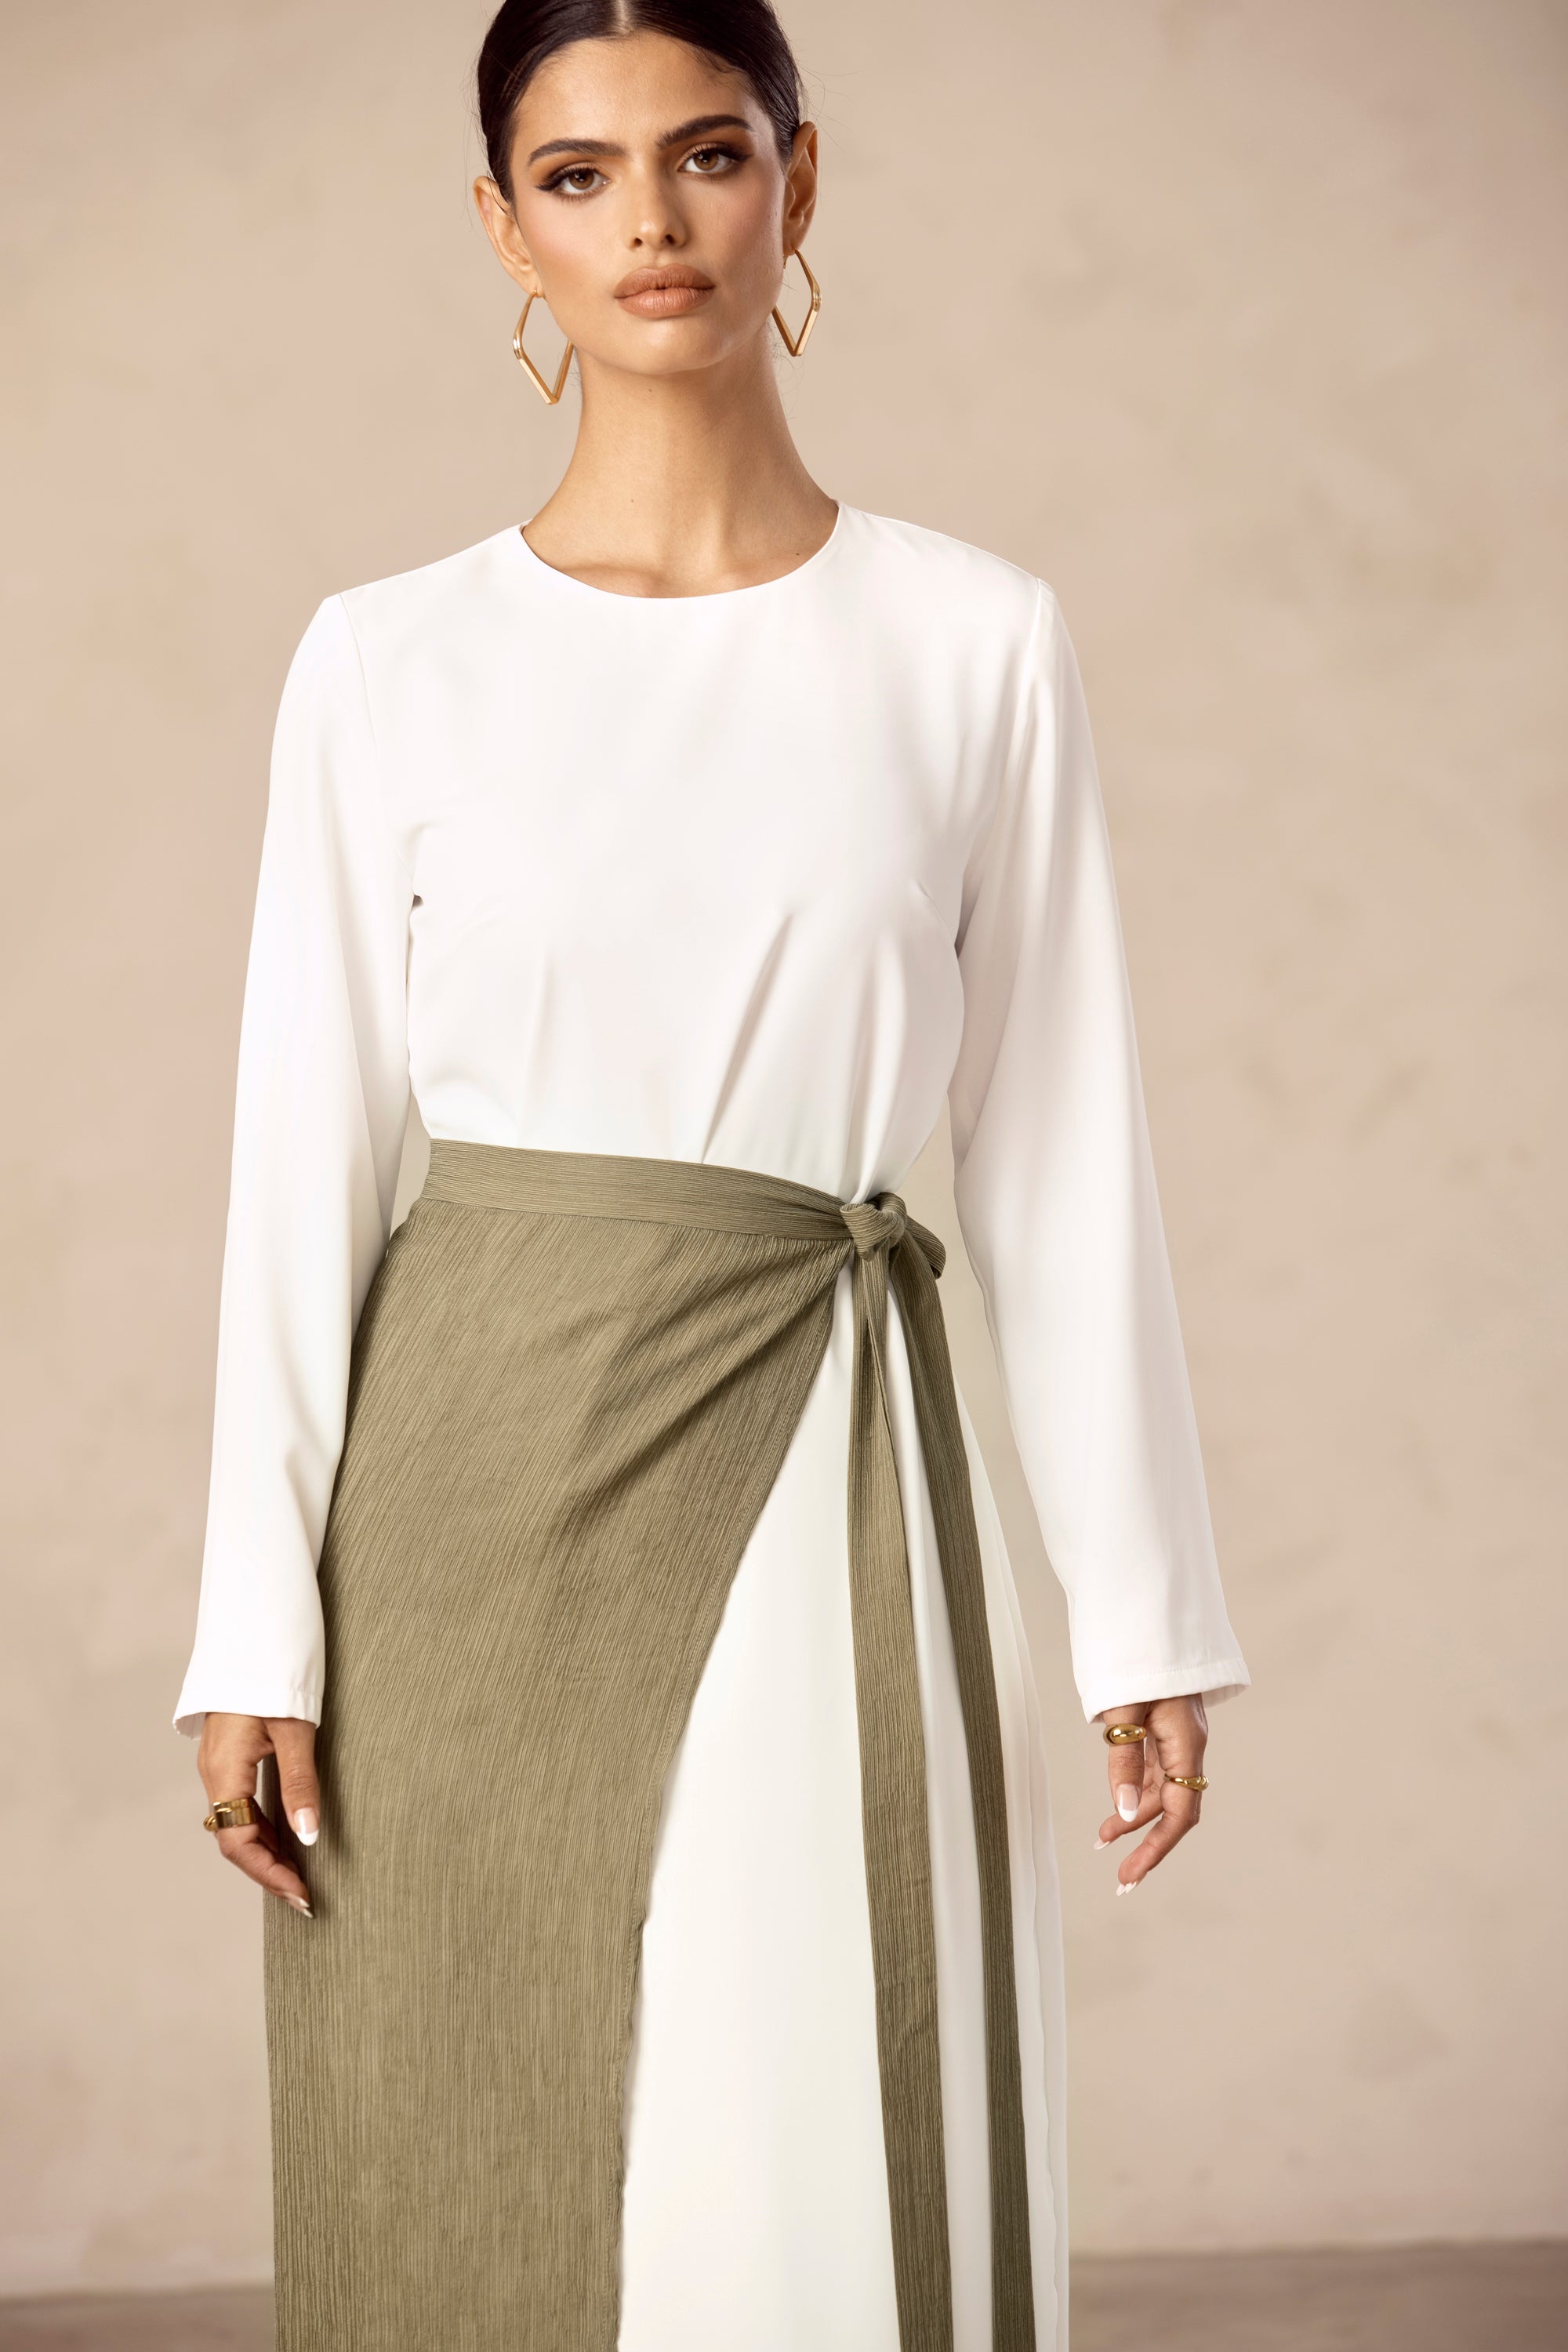 Rana Textured Overlay Tie Skirt - Gardenia Green Veiled Collection 